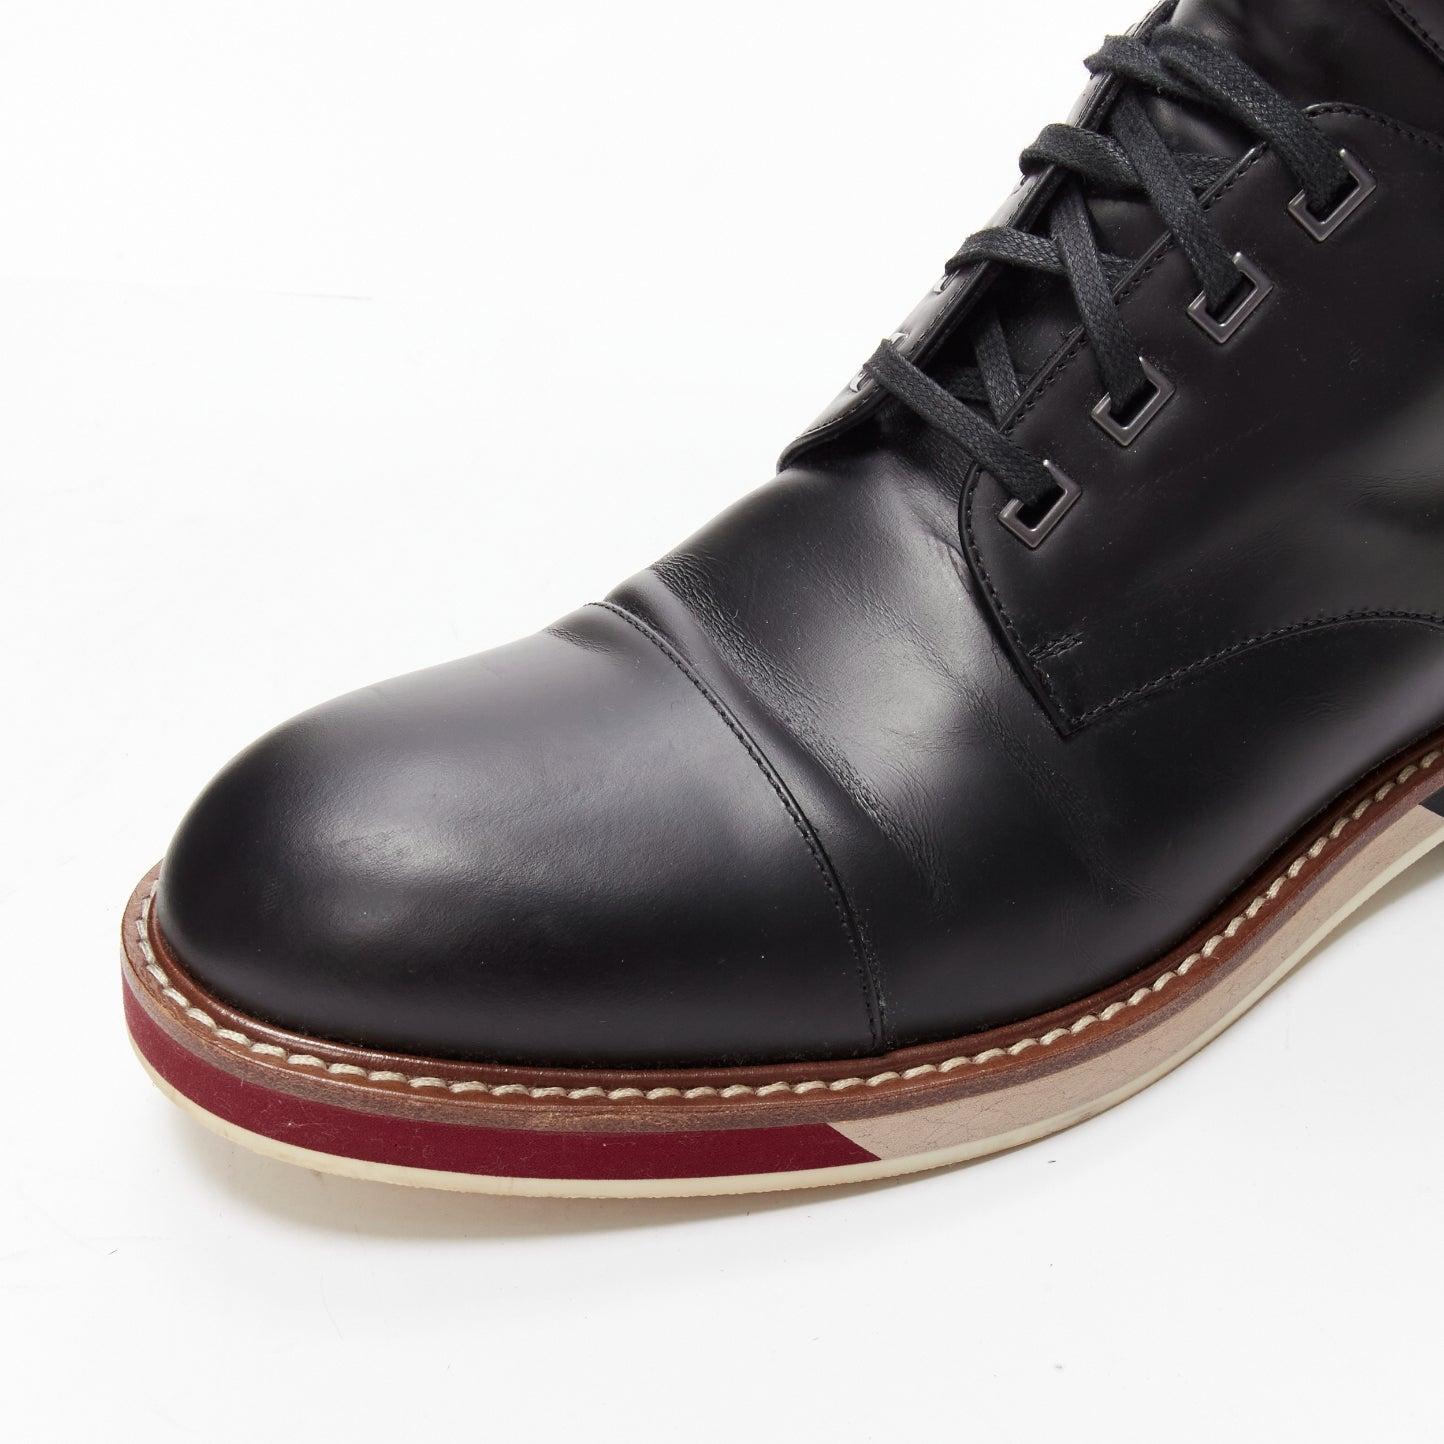 LOUIS VUITTON Sword black leather LV logo hiking lace up boots UK7.5 EU41.5 For Sale 3